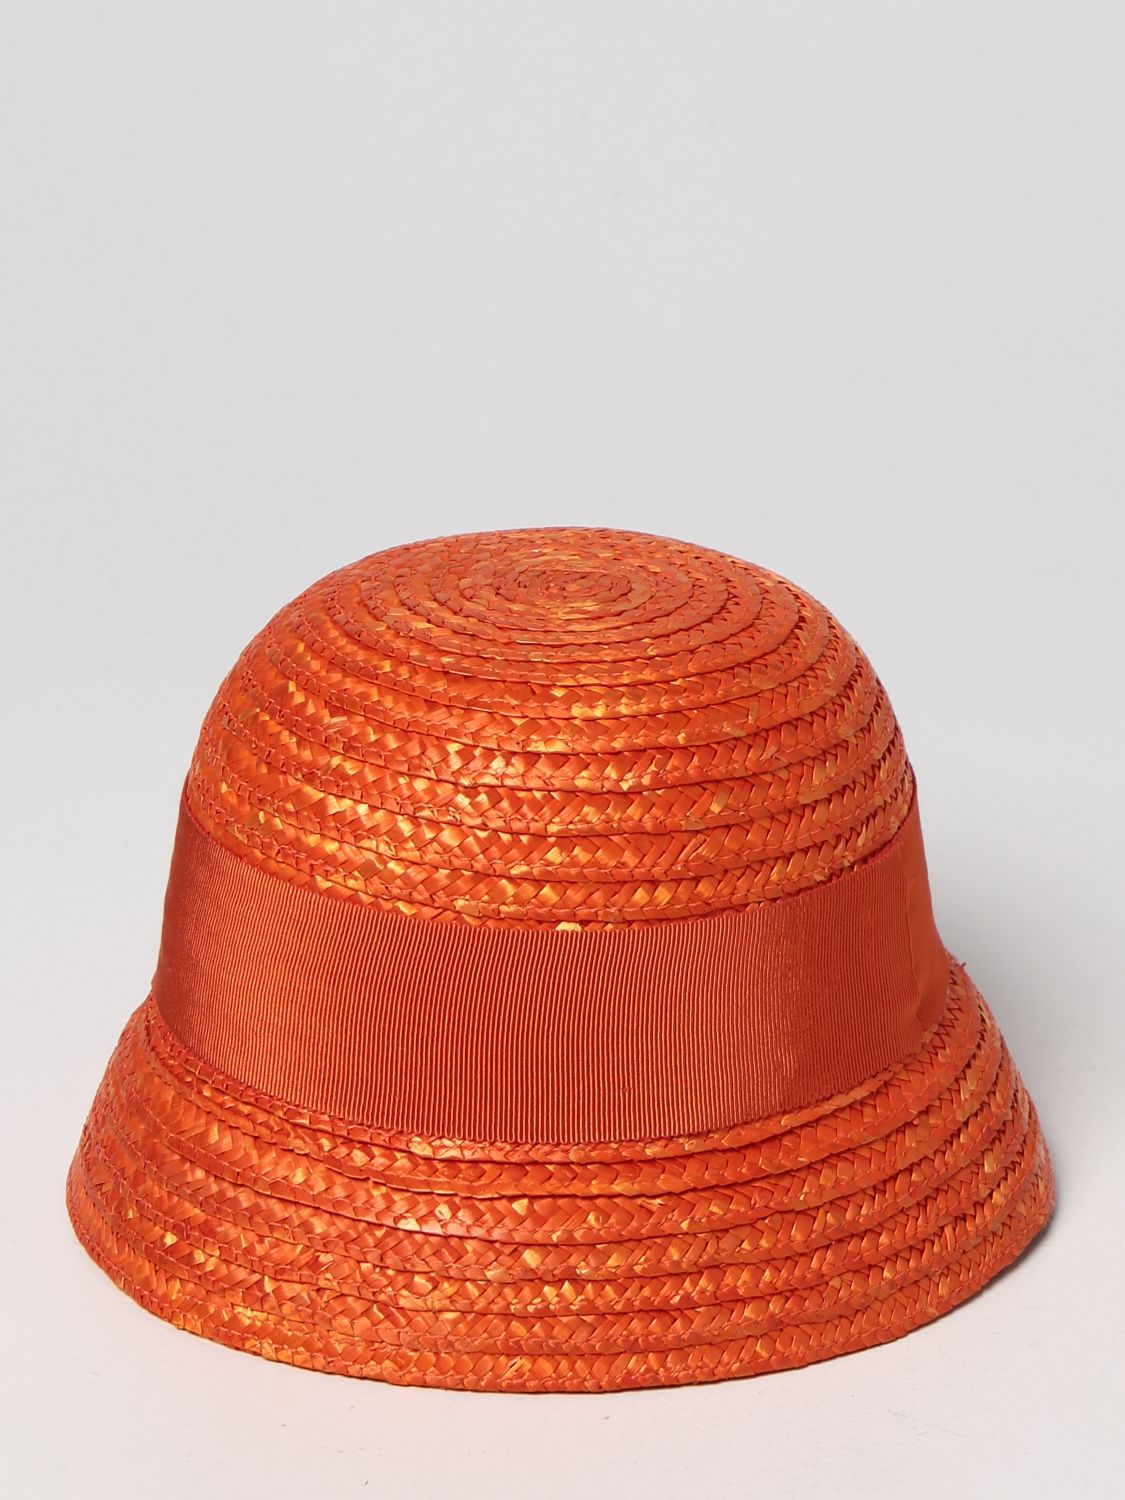 Girls' hats Mi Mi Sol: Mi Mi Sol hat in woven straw orange 1